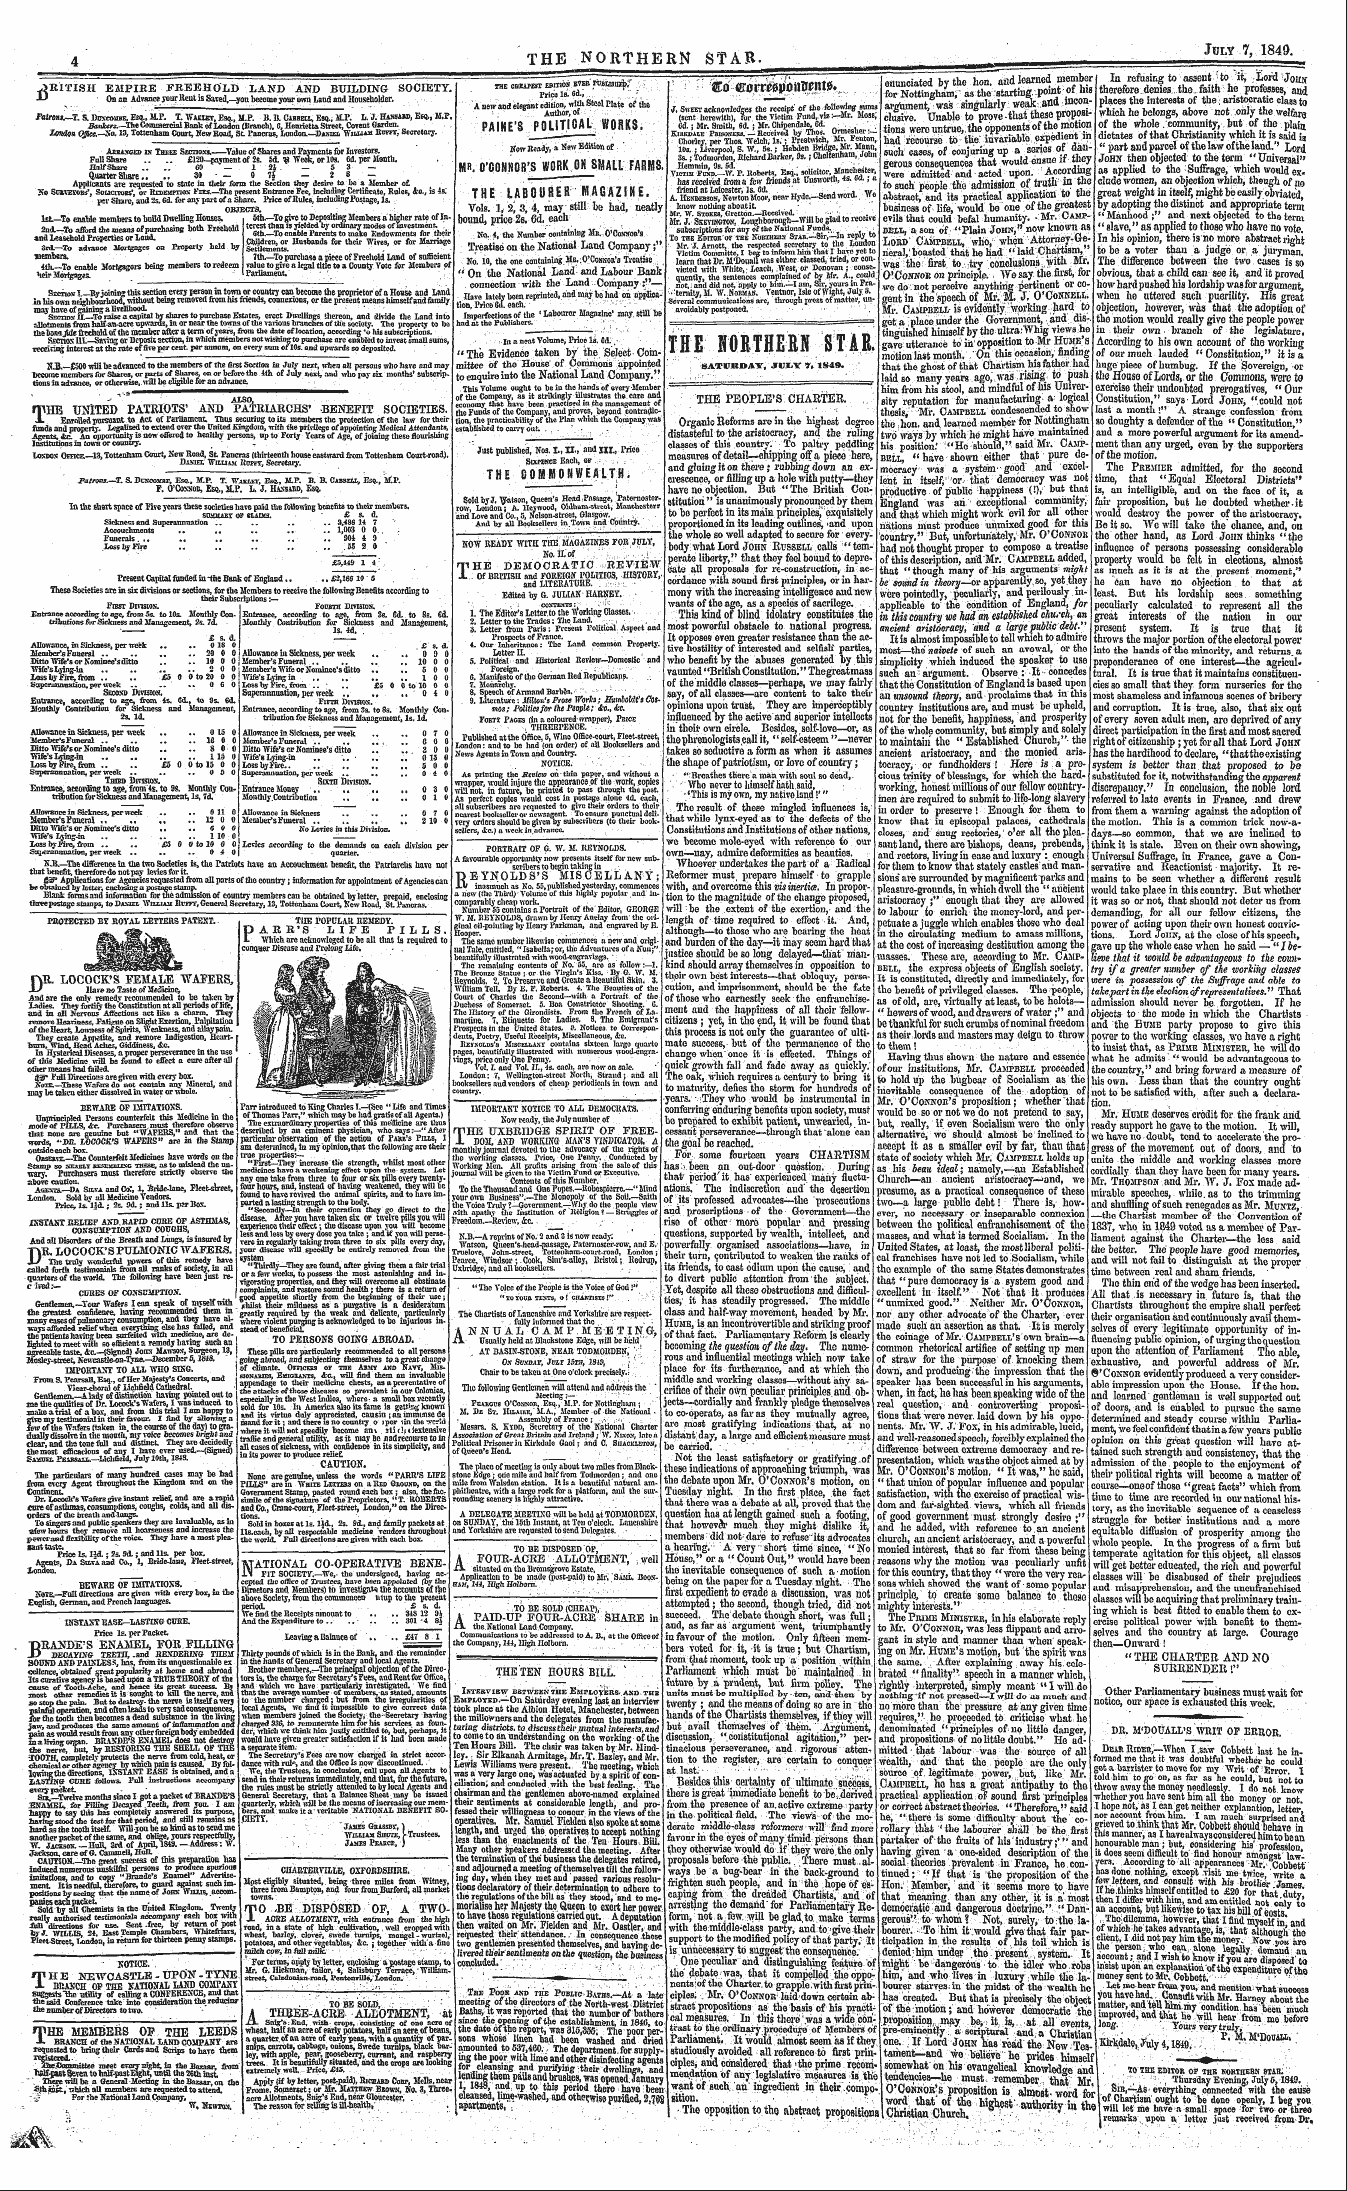 Northern Star (1837-1852): jS F Y, 3rd edition - Ad00410